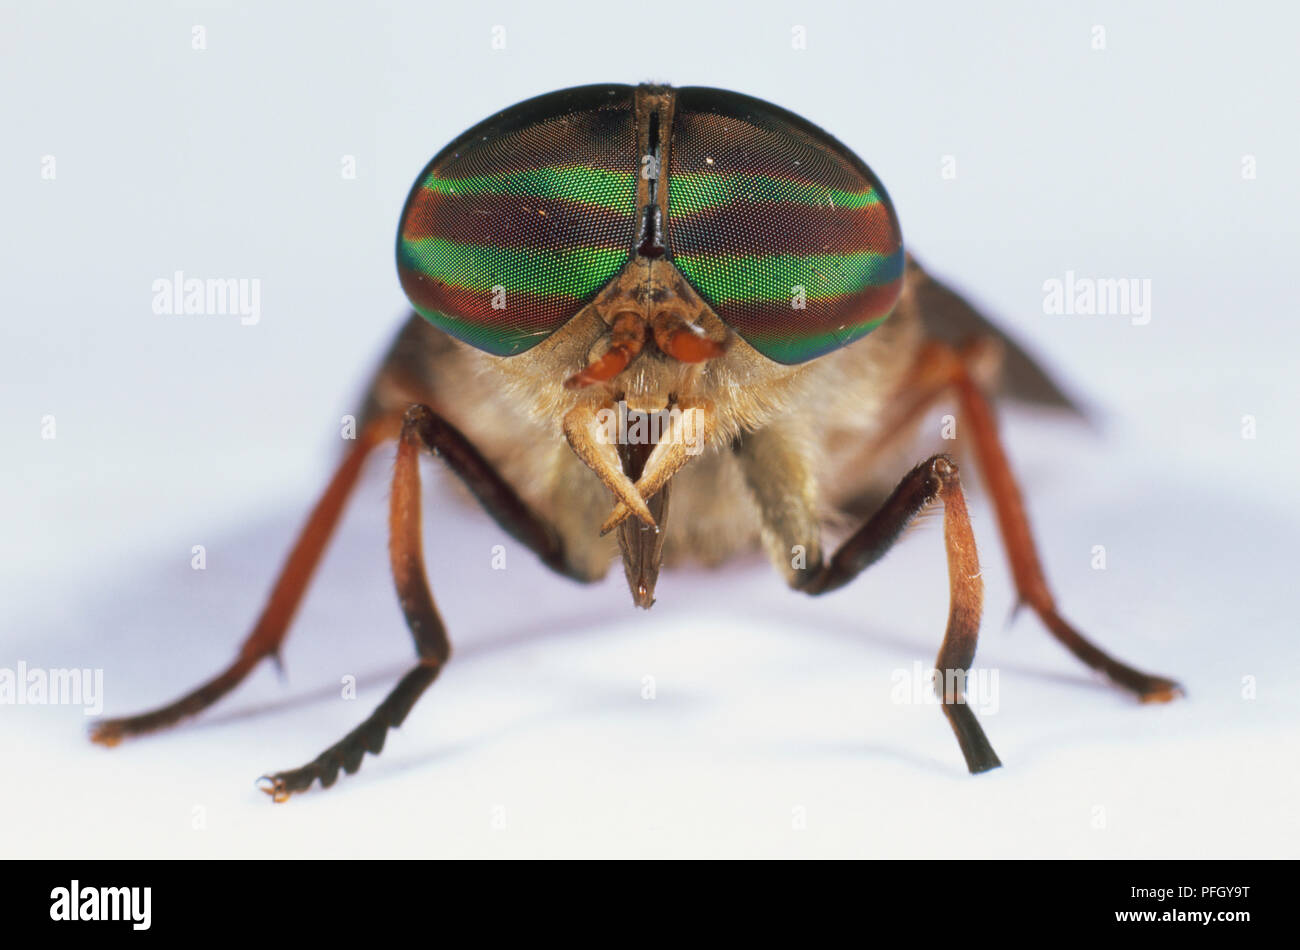 Horsefly (Tabanidae), chiusura del grande nero-verde occhi composti, vista frontale. Foto Stock